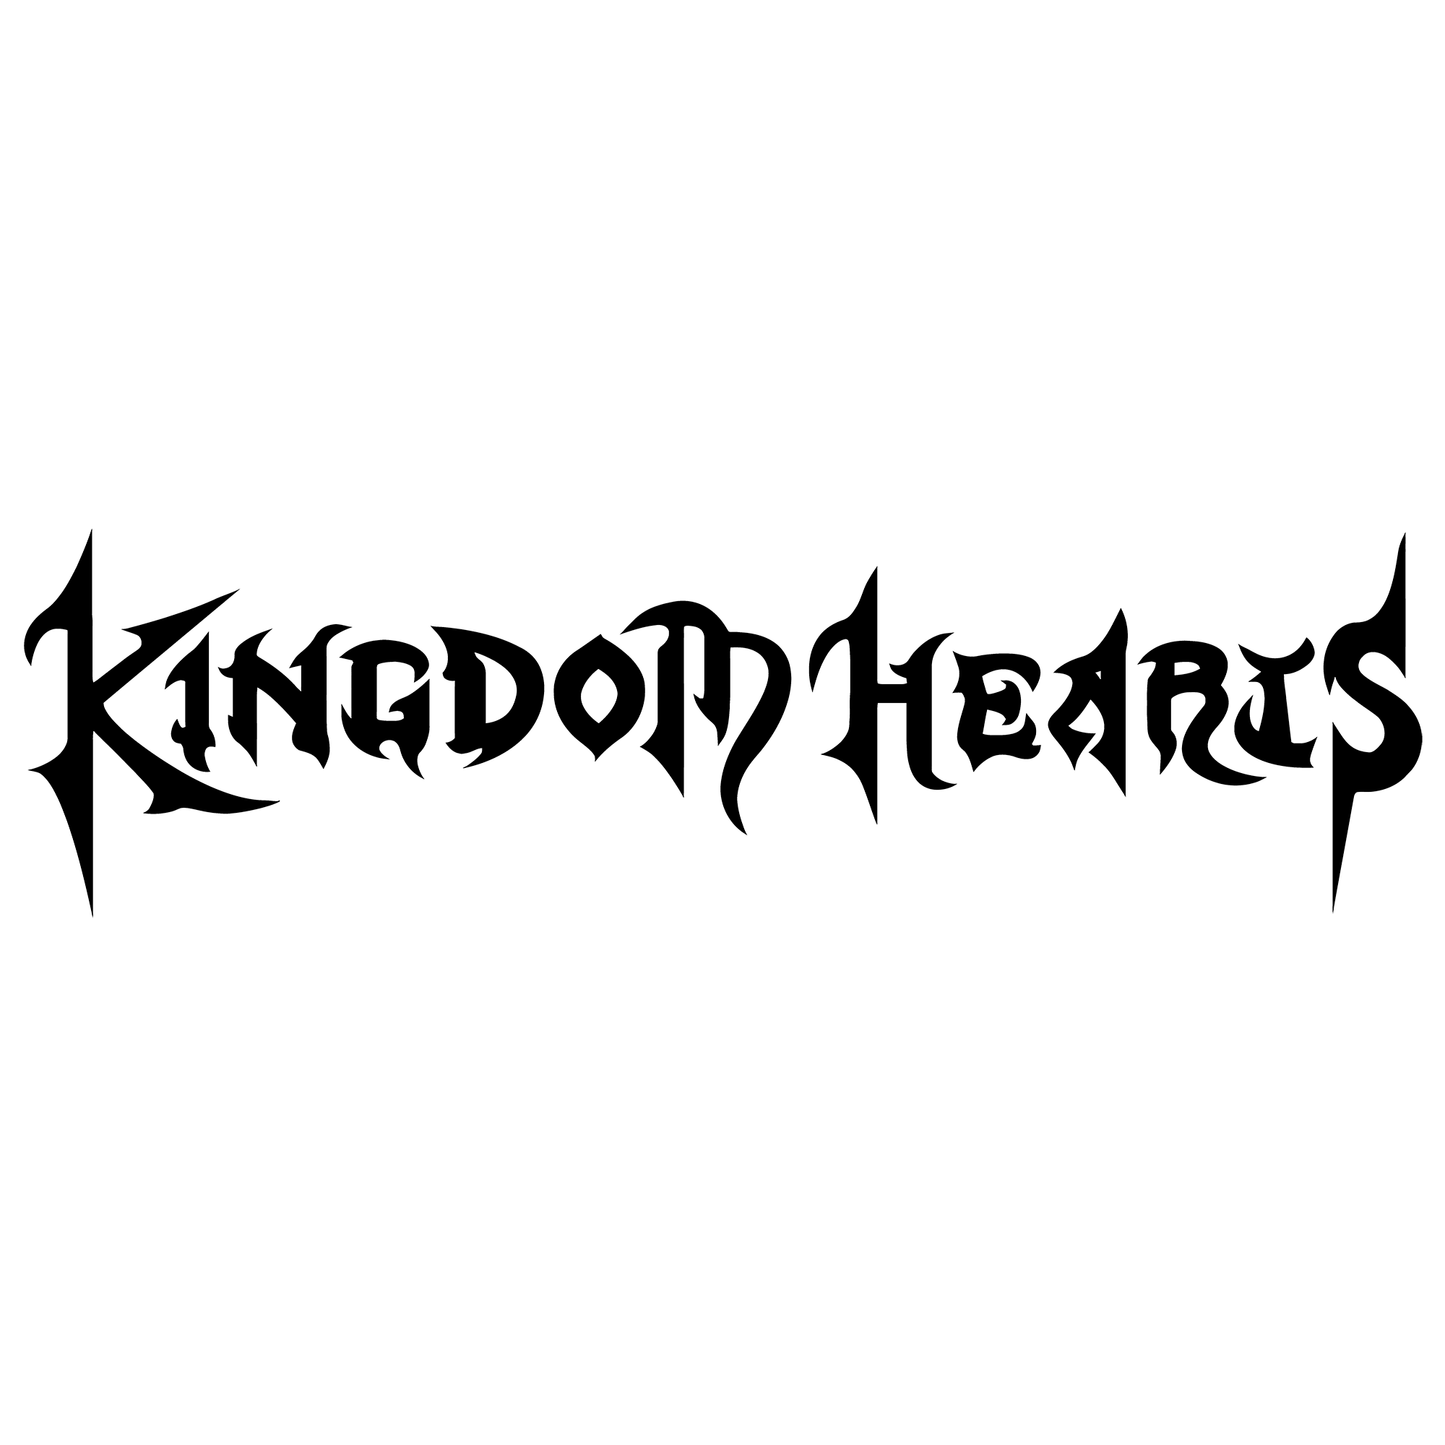 Kingdom Hearts Vinyl Decal Sticker